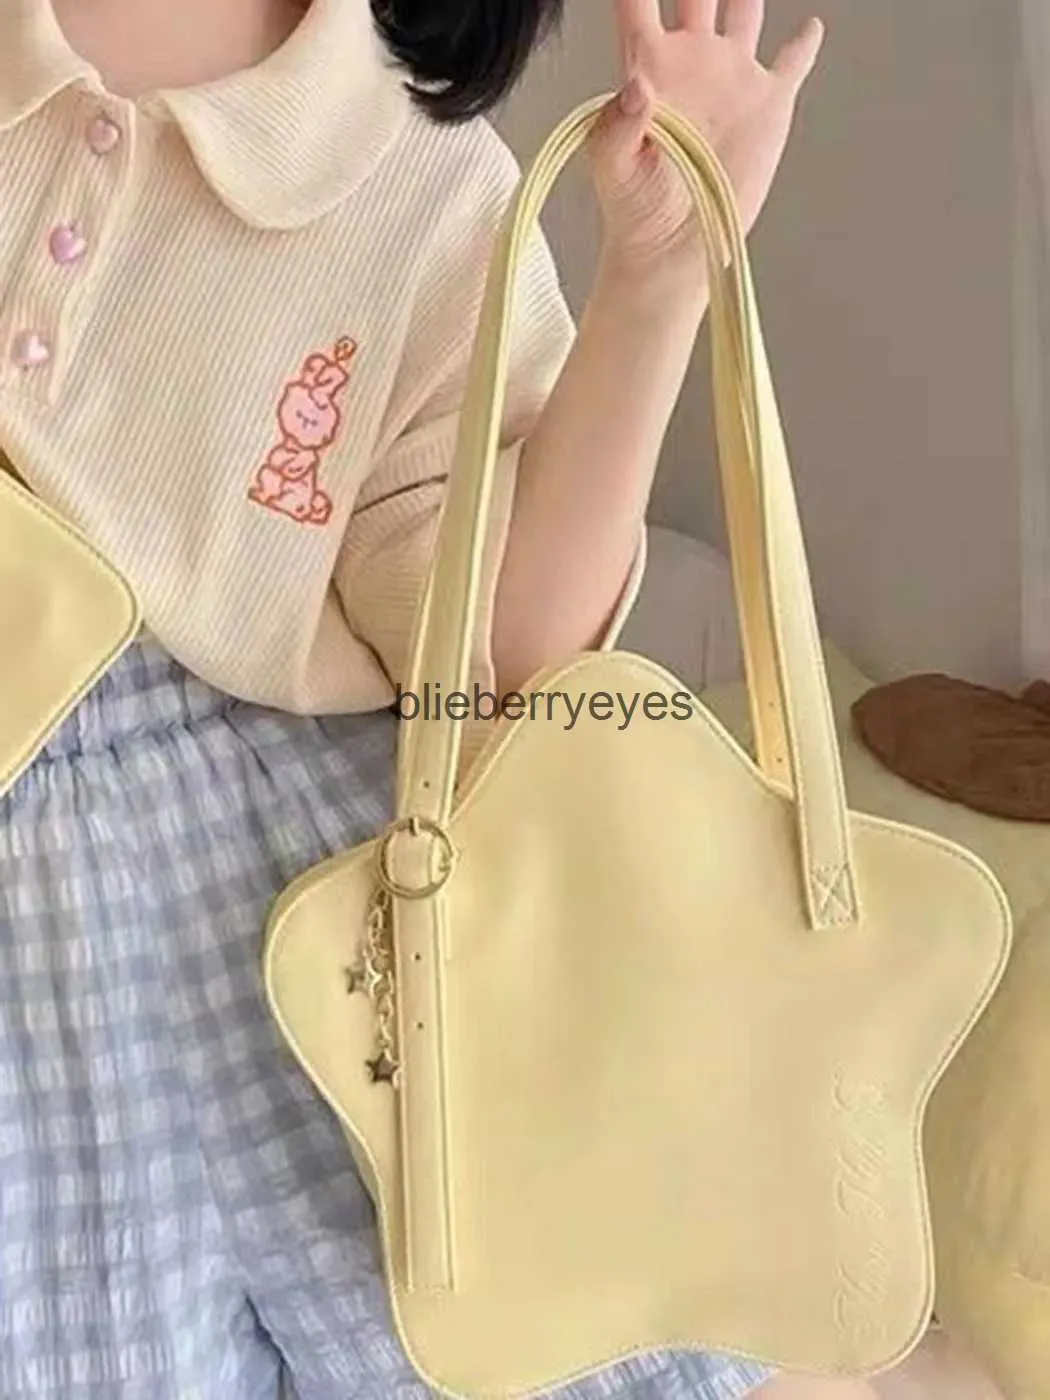 Shoulder Bags Yellow Handbag Pu Leather Chic Shoulder Bag Ladies Retro Cute Lolita Mini Bag Aestheticblieberryeyes